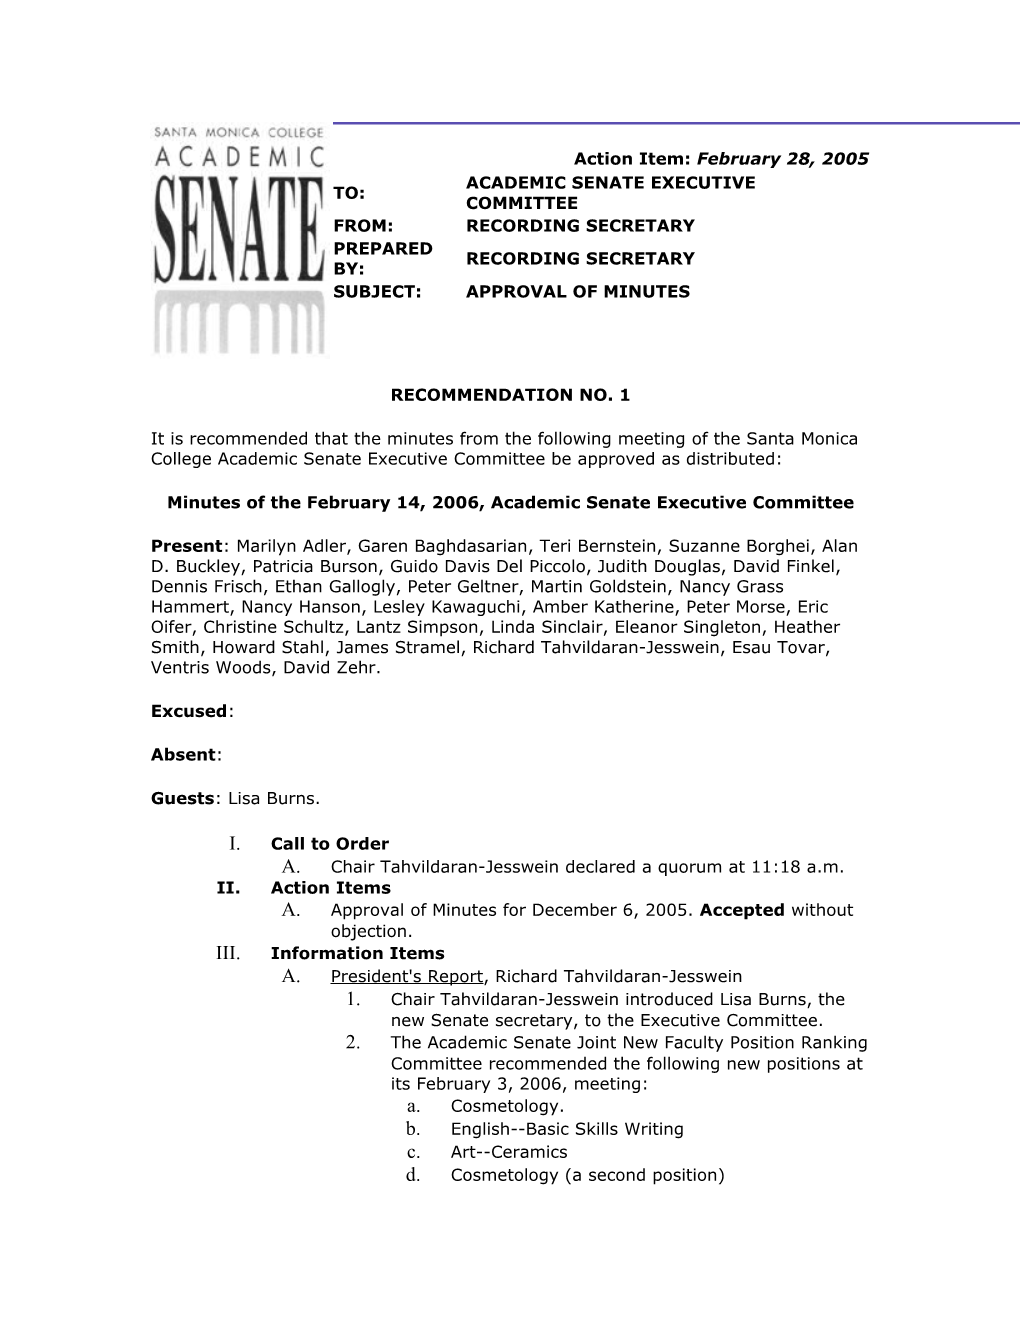 Minutes of the February 14, 2006, Academic Senate Executive Committee